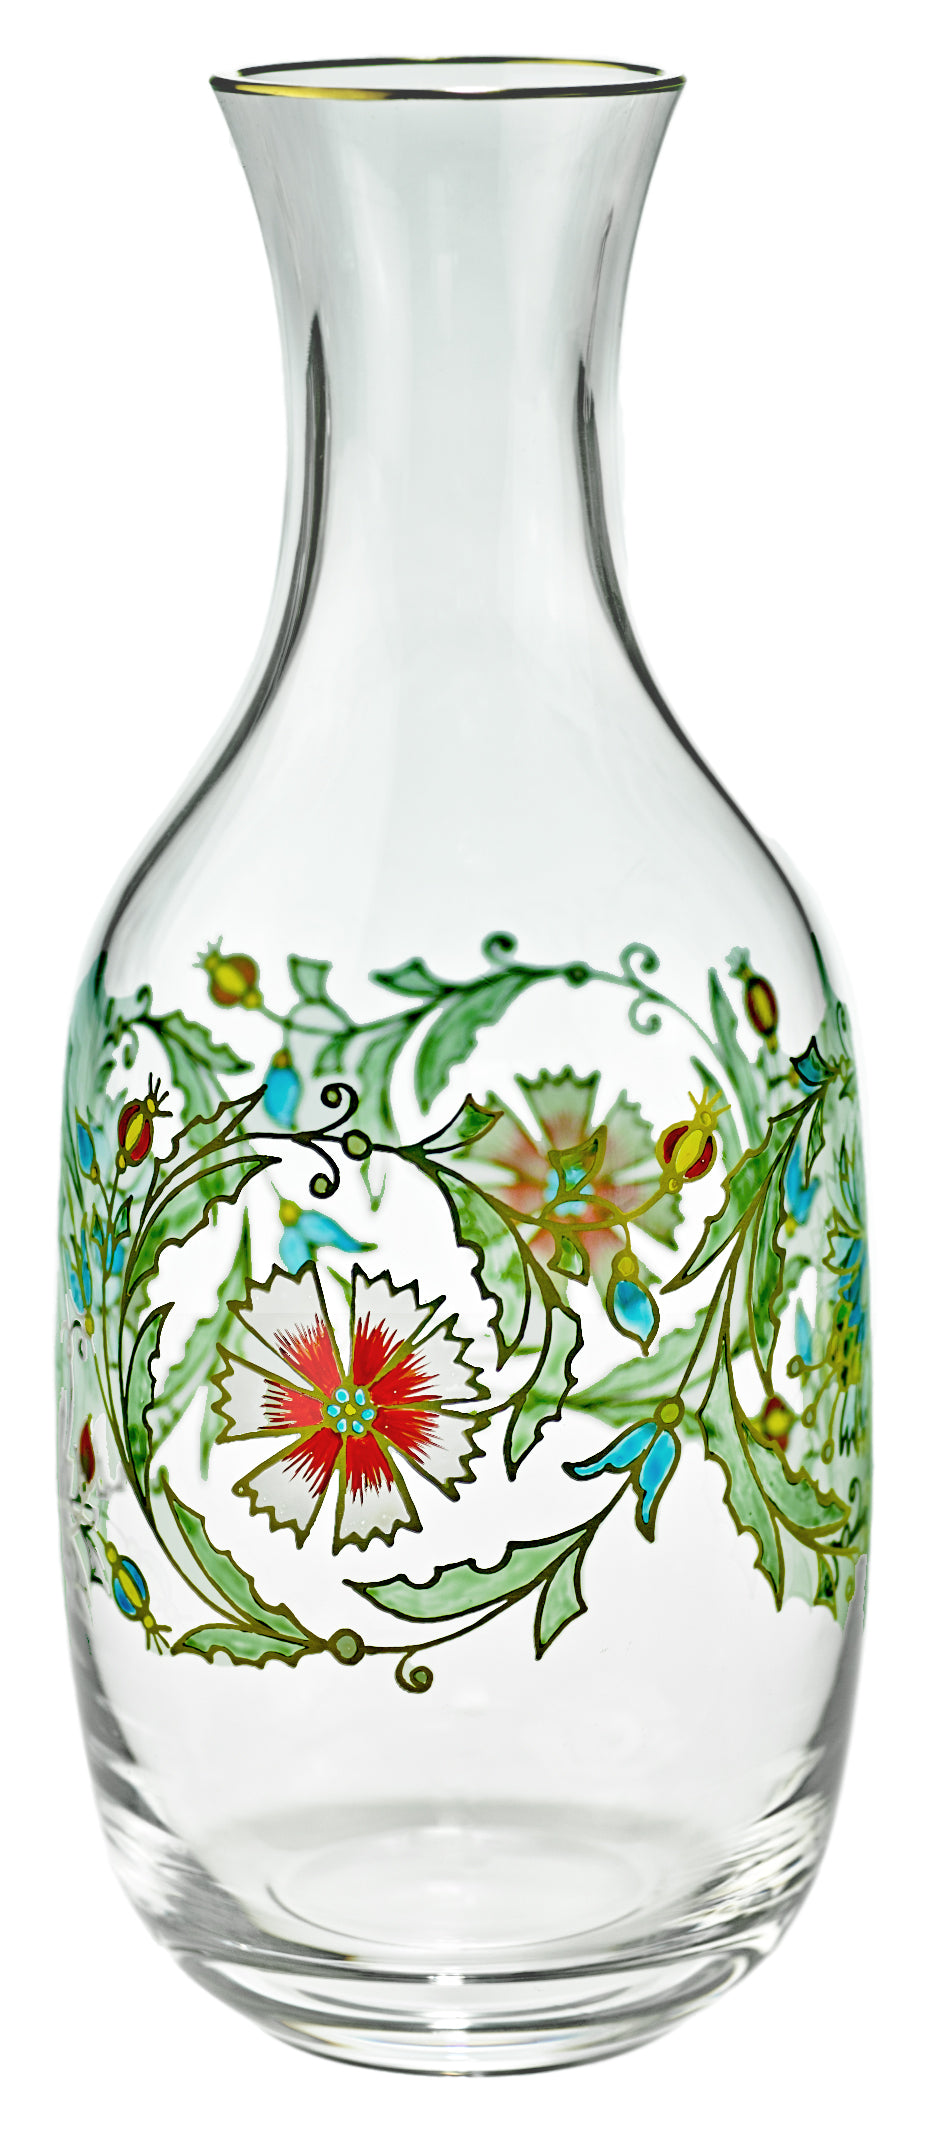 ELISABETH klar, florale Handmalerei - Flasche 0,75 l, 241 mm